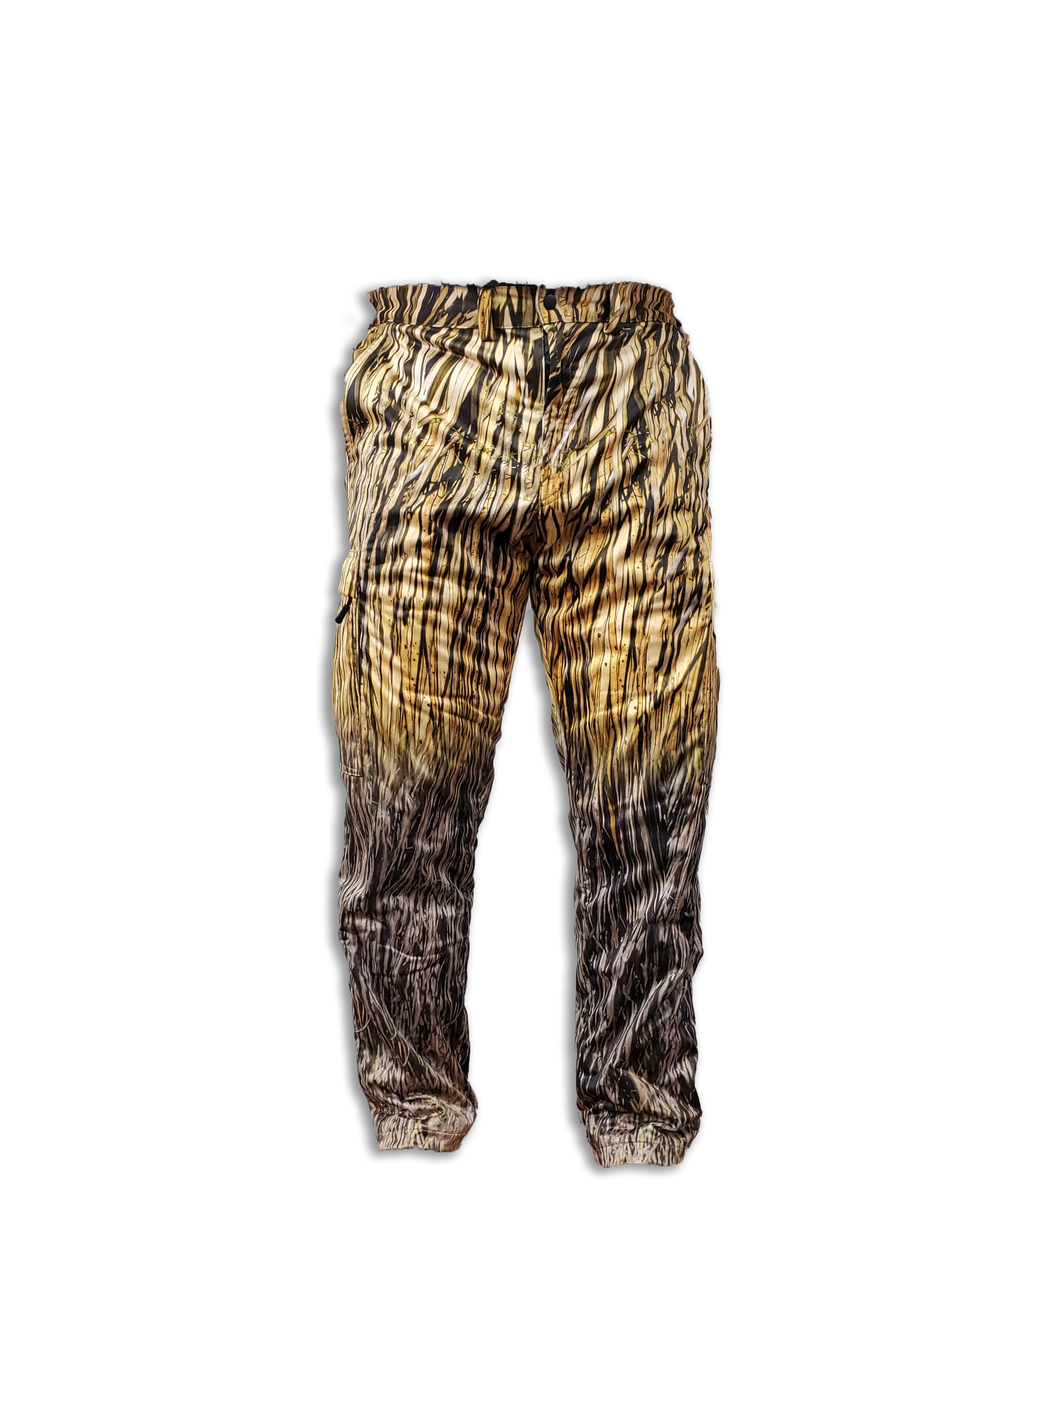 Stickman Camo - Waterproof - Fleece-Lined Pants